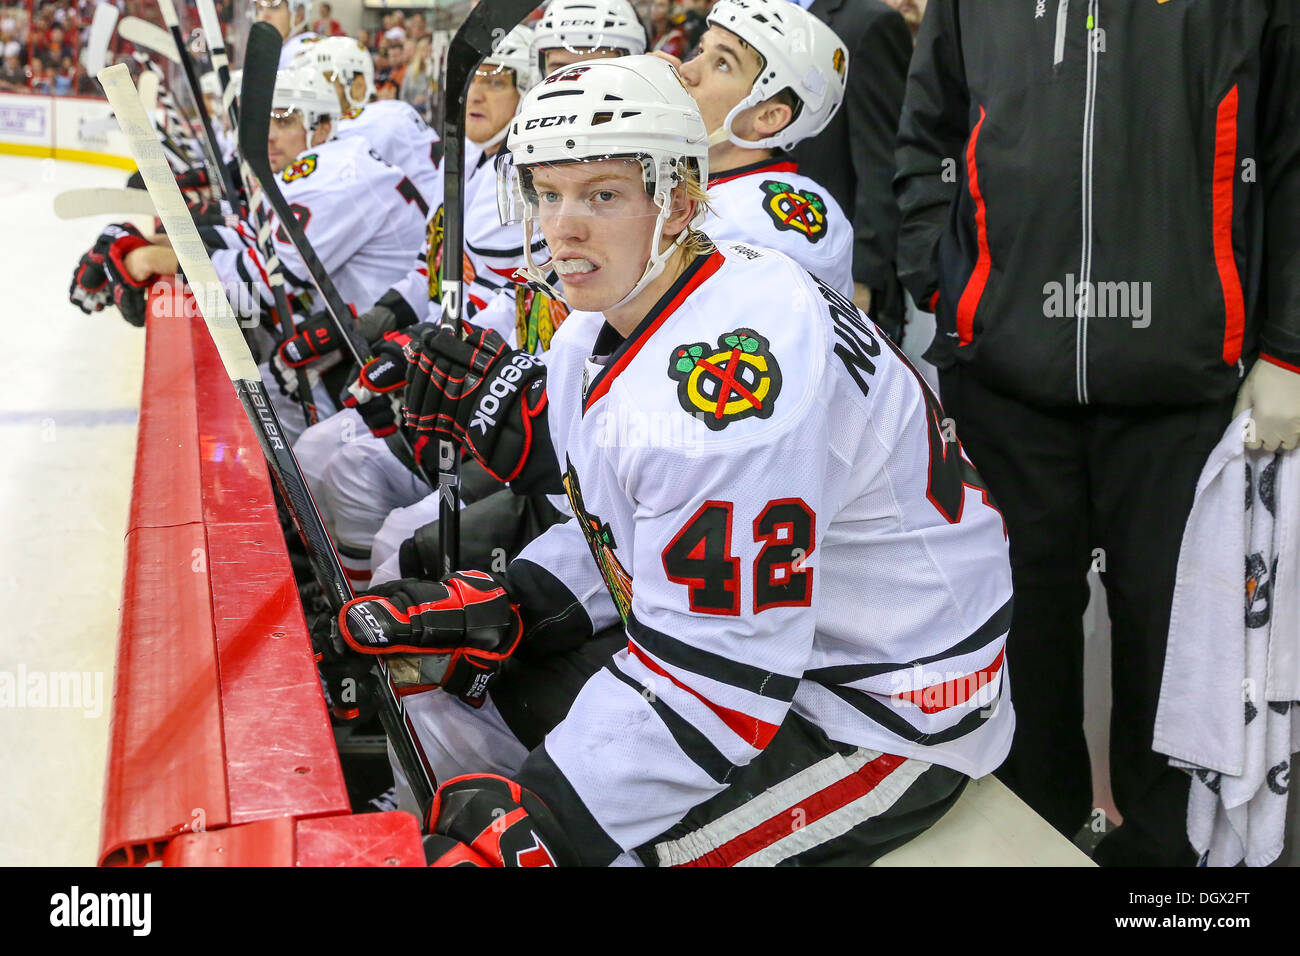 Chicago Blackhawk Joakim Nordstrom during an NHL hockey game during the 2013-2014 season Stock Photo